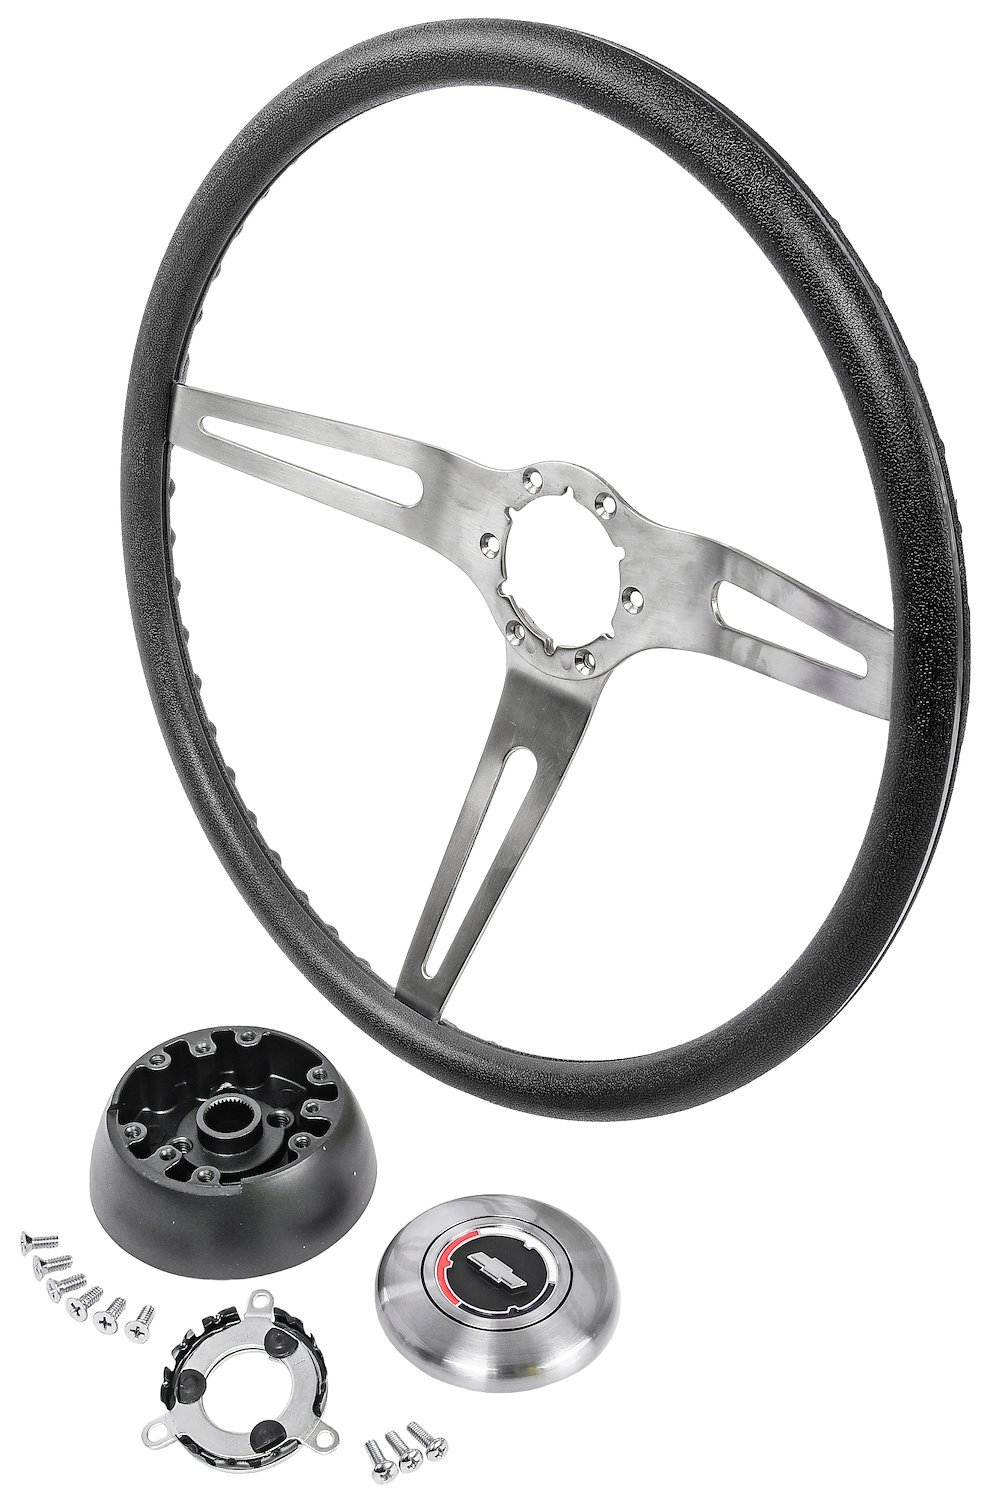 3-Spoke Comfort Grip Steering Wheel Kit Fits Select 1969-1972 Chevrolet Cars [Black Grip]